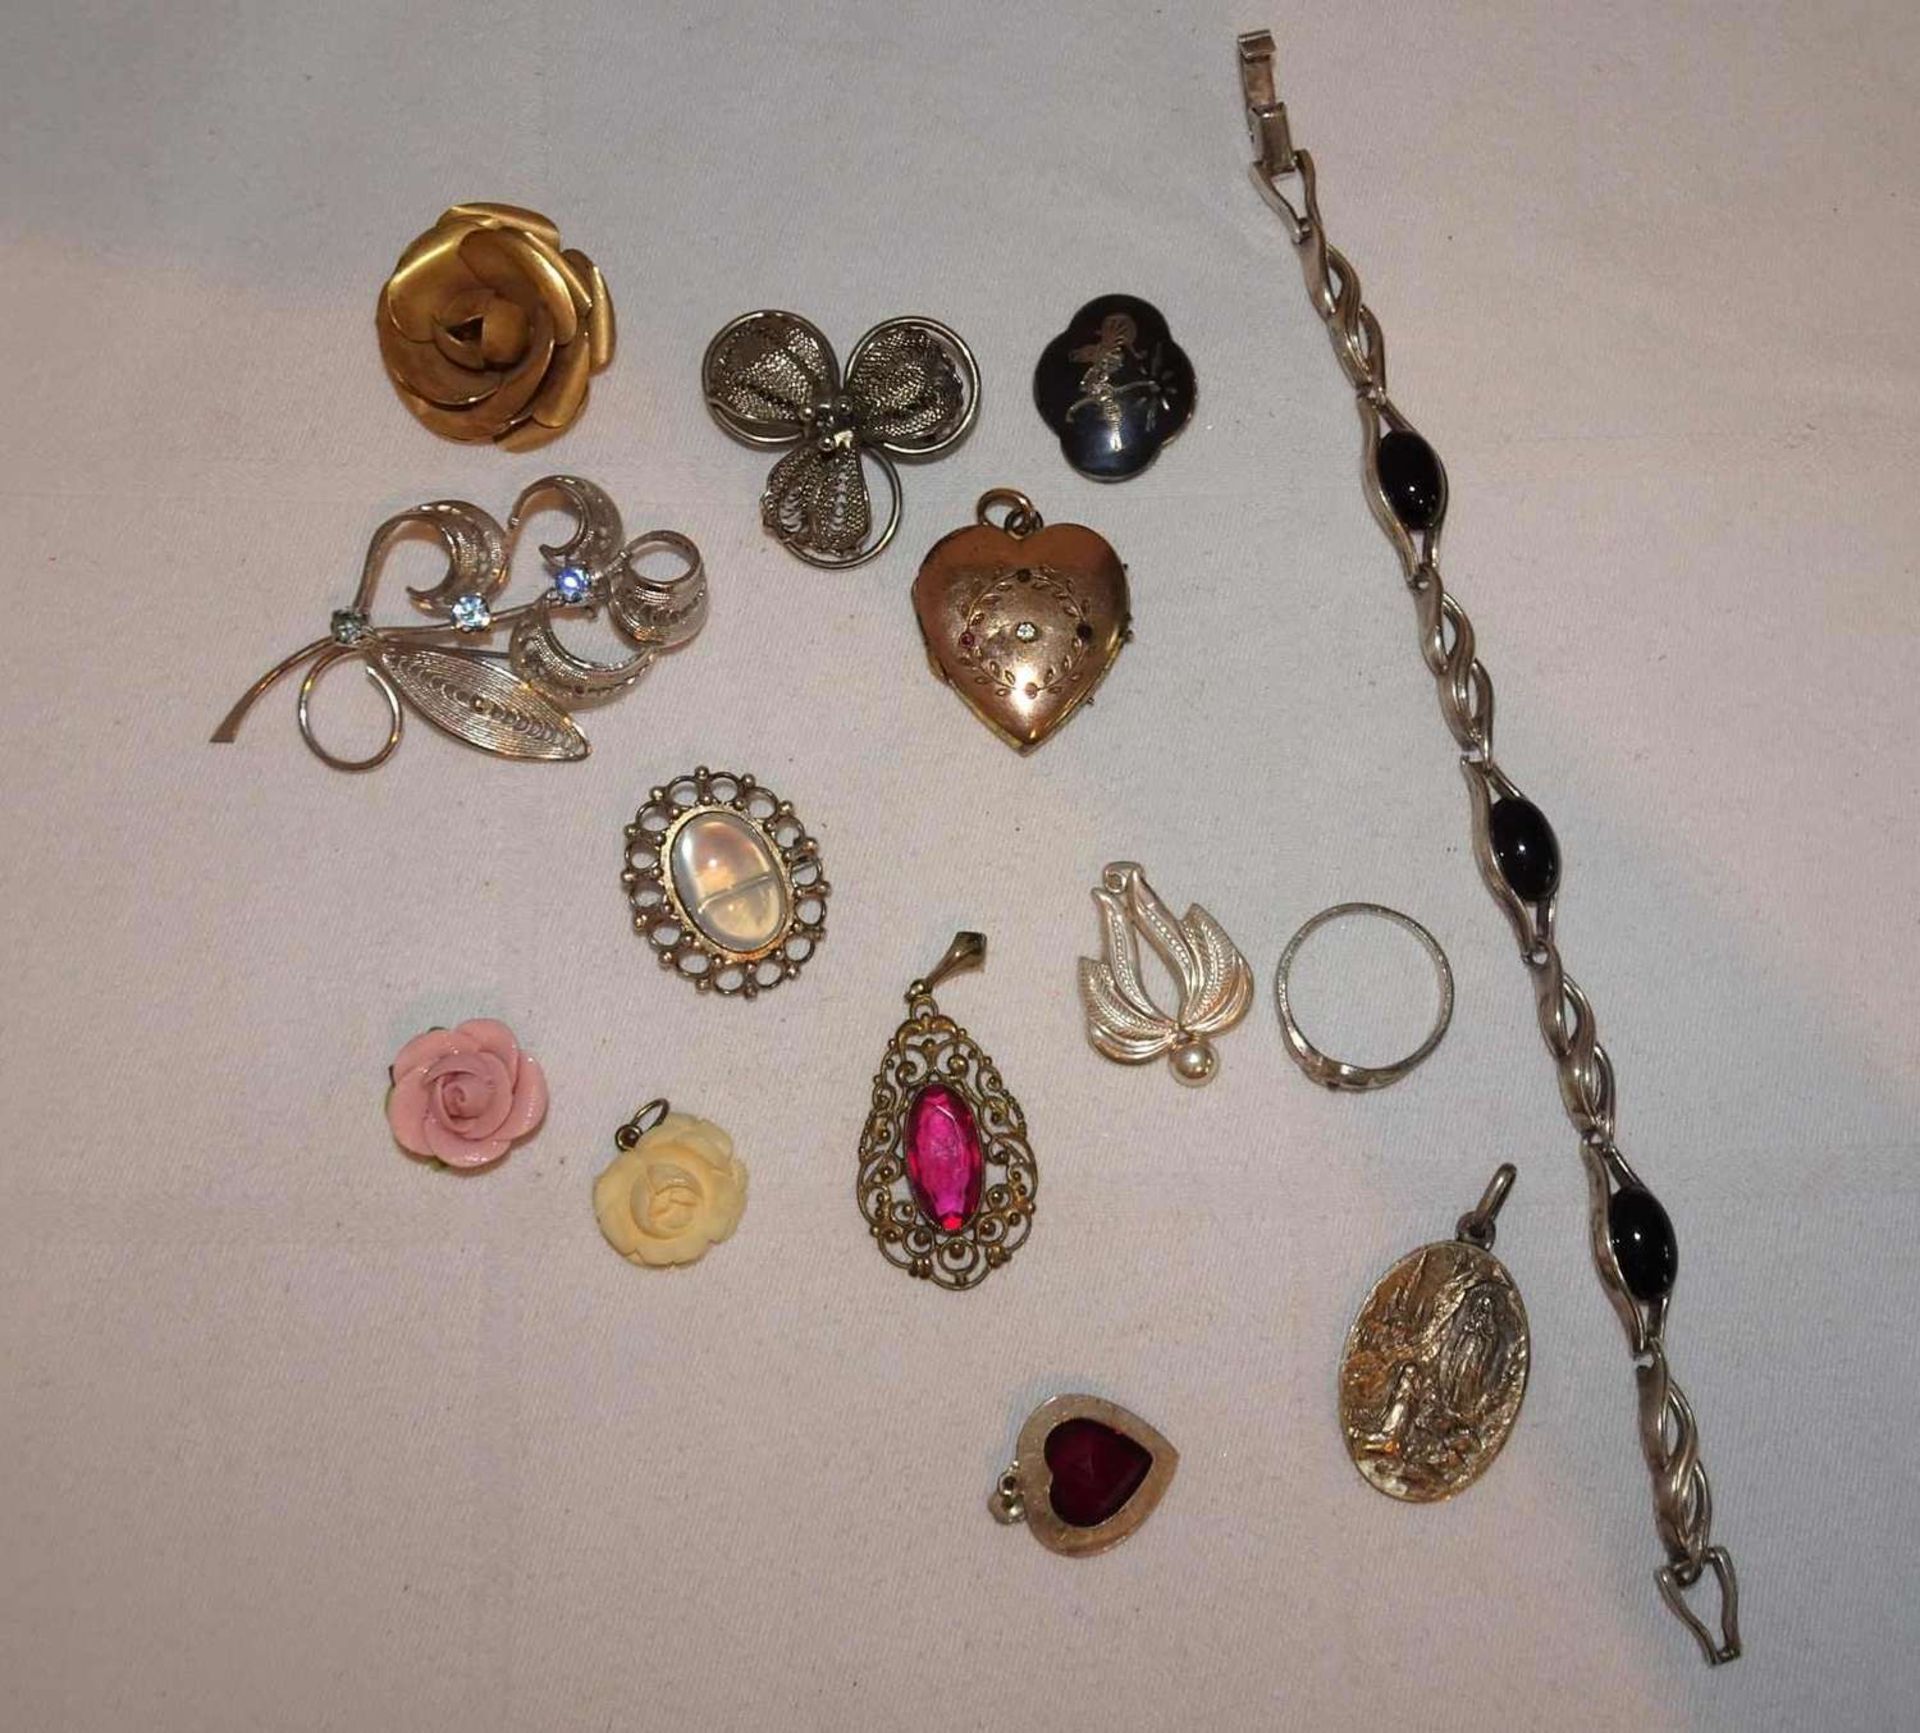 Lot alter Modeschmuck, dabei Broschen, Anhänger, etc.Lot of old fashion jewelry, including brooche